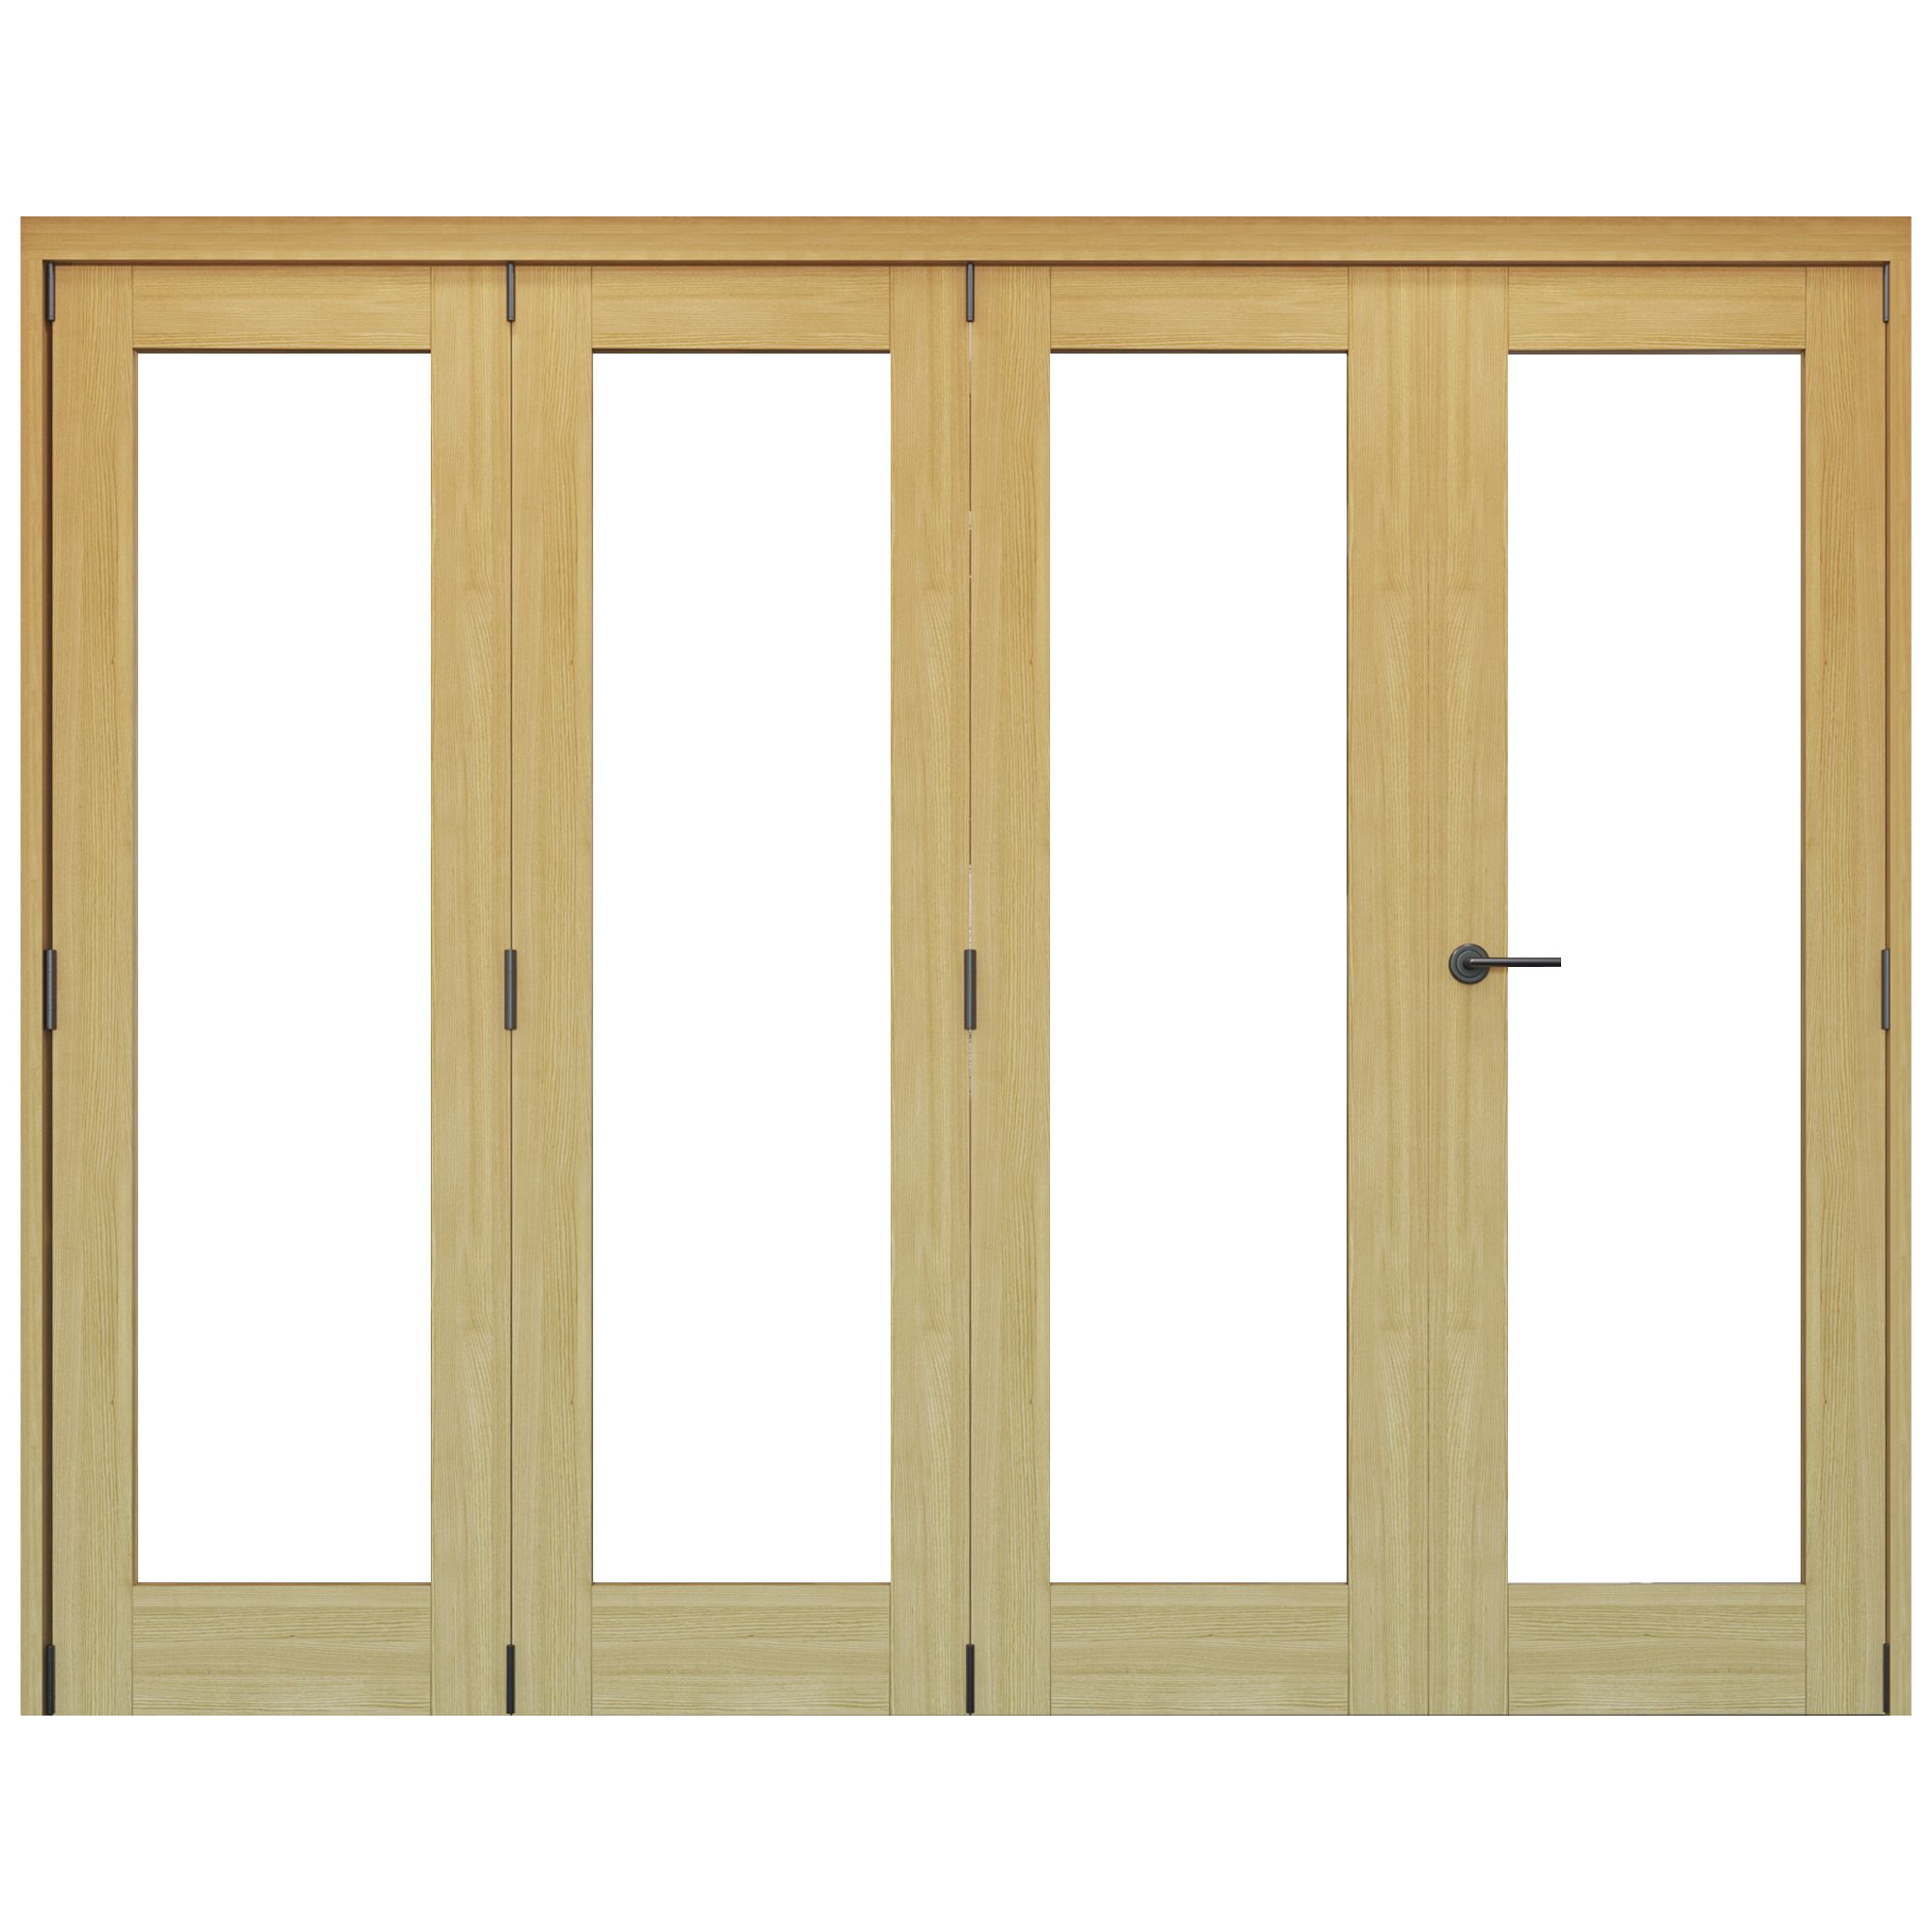 Vertical 0 panel 1 Lite Plain Clear Glazed Shaker Unfinished White oak effect Timber White oak veneer Folding Internal Folding Door set, (H)2060mm (W)2369mm